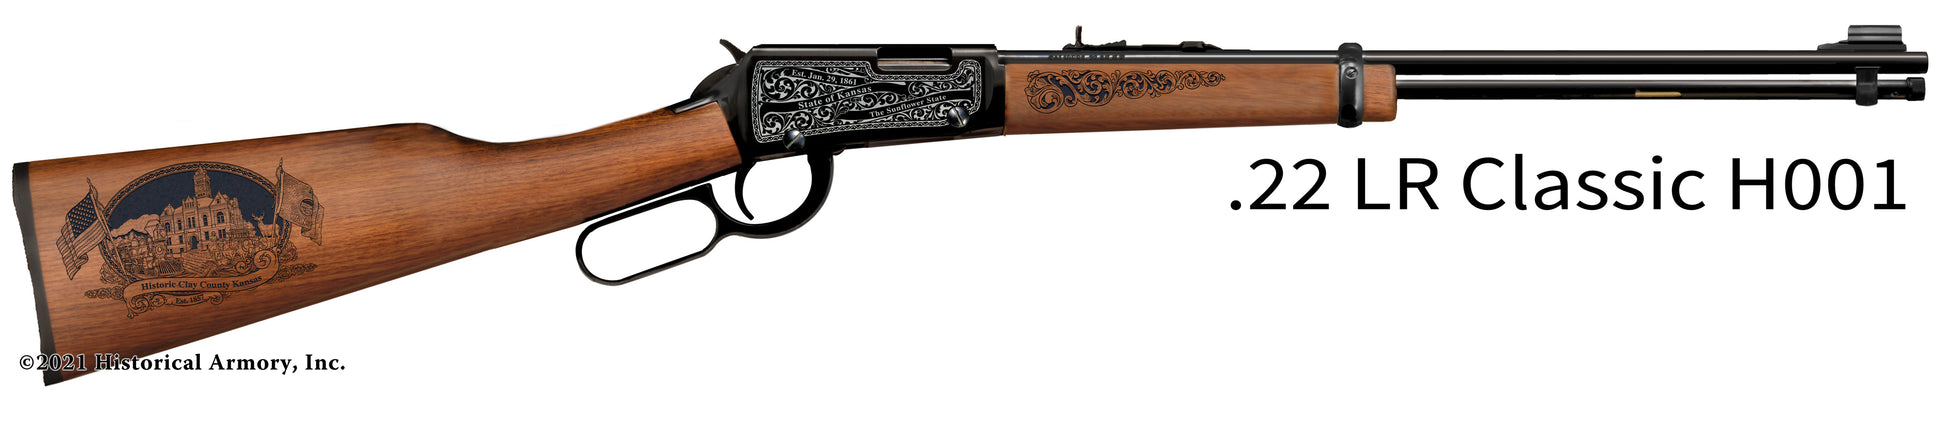 Clay County Kansas Engraved H001 Rifle